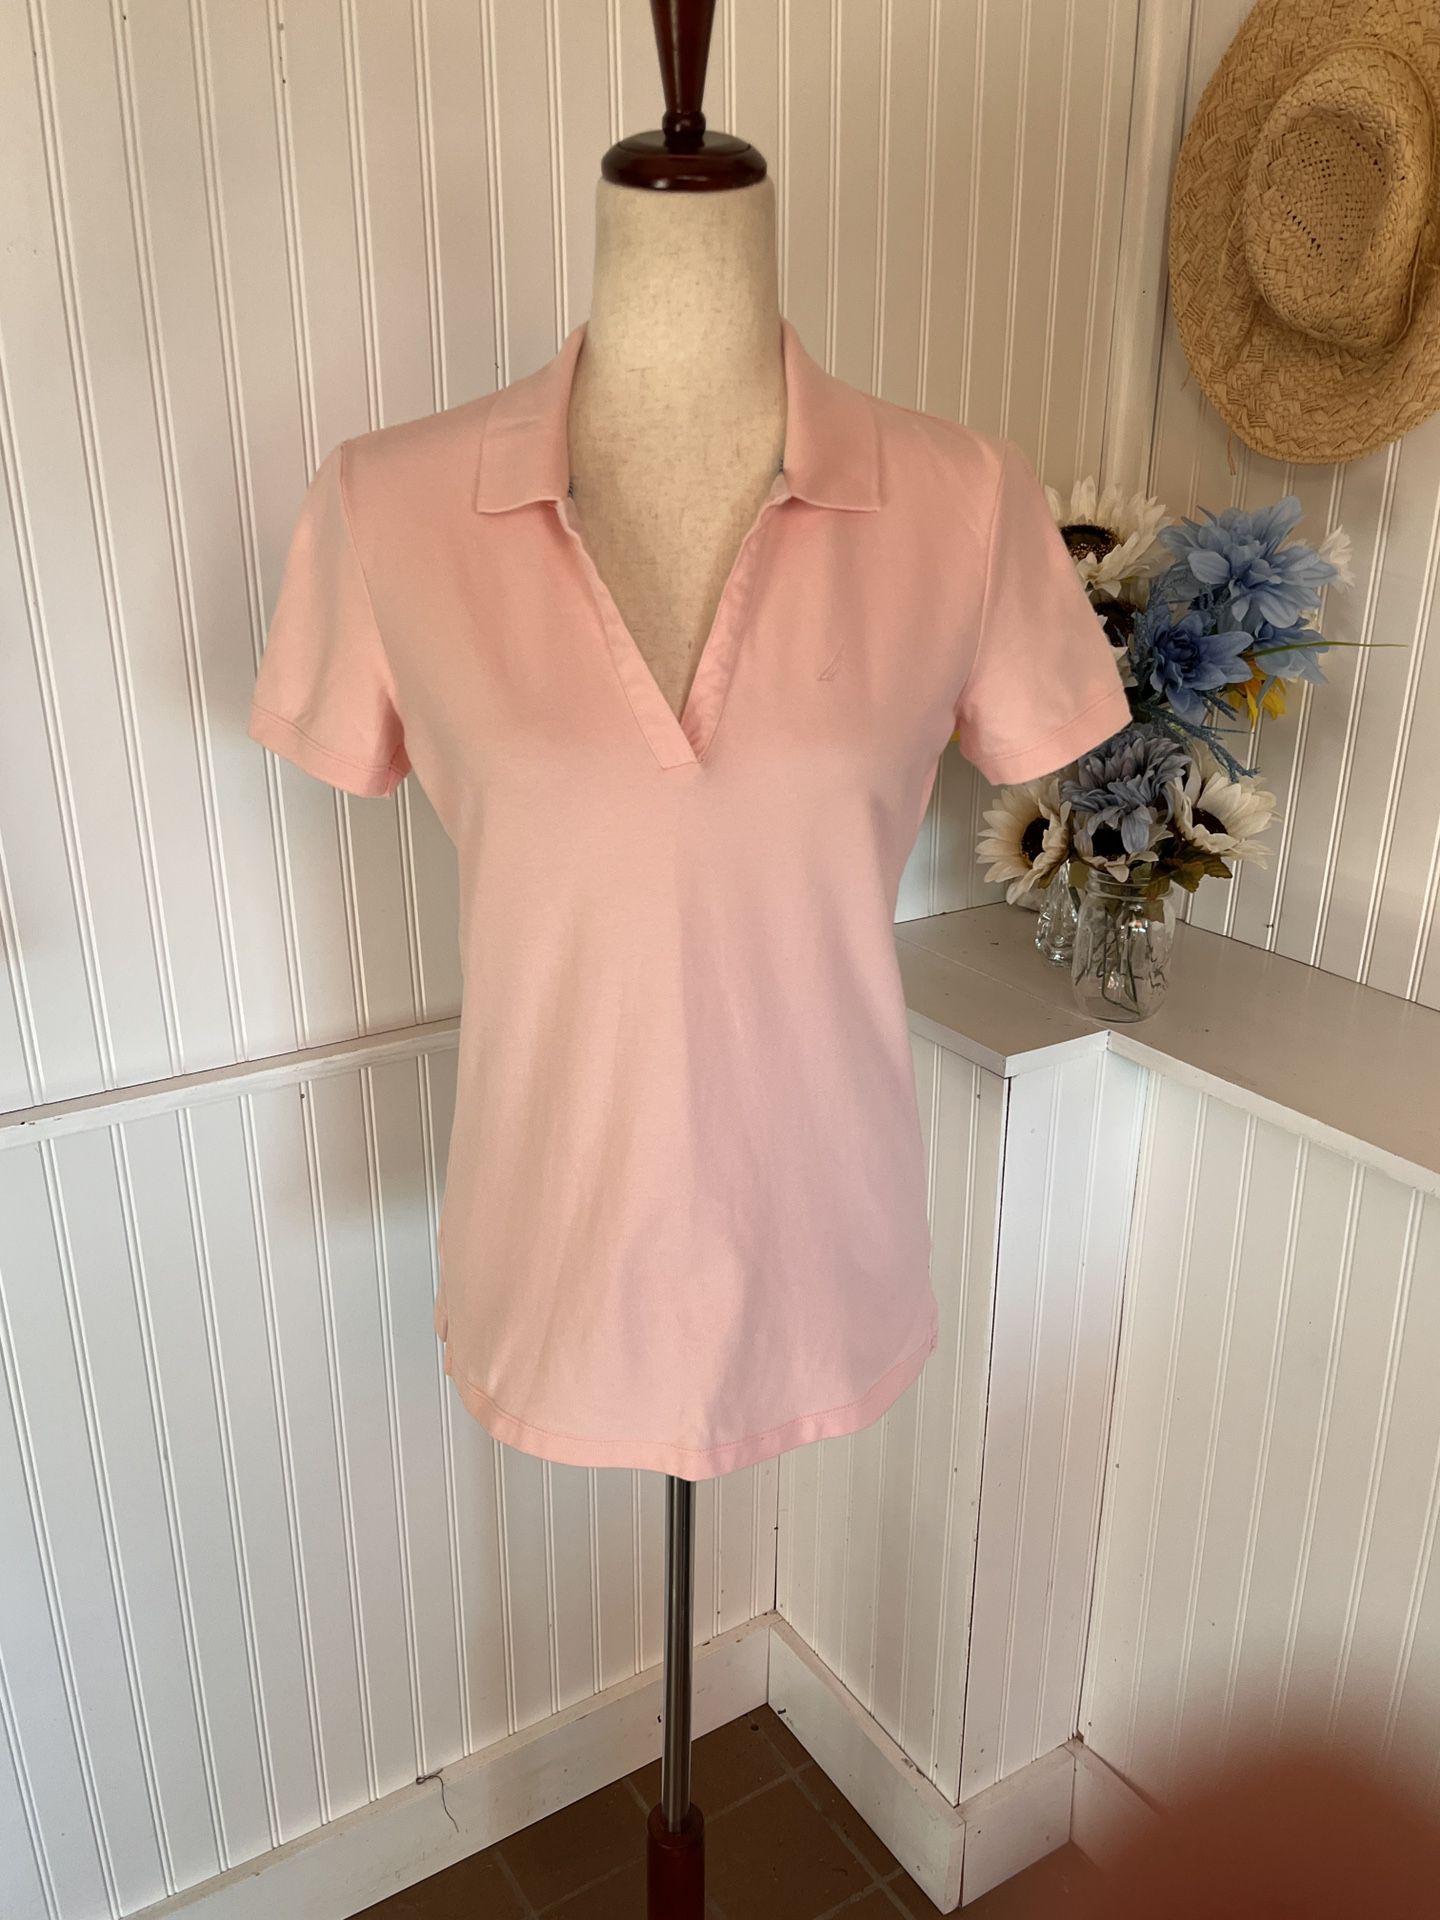 Nautica Pink Short Sleeved Polo Shirt